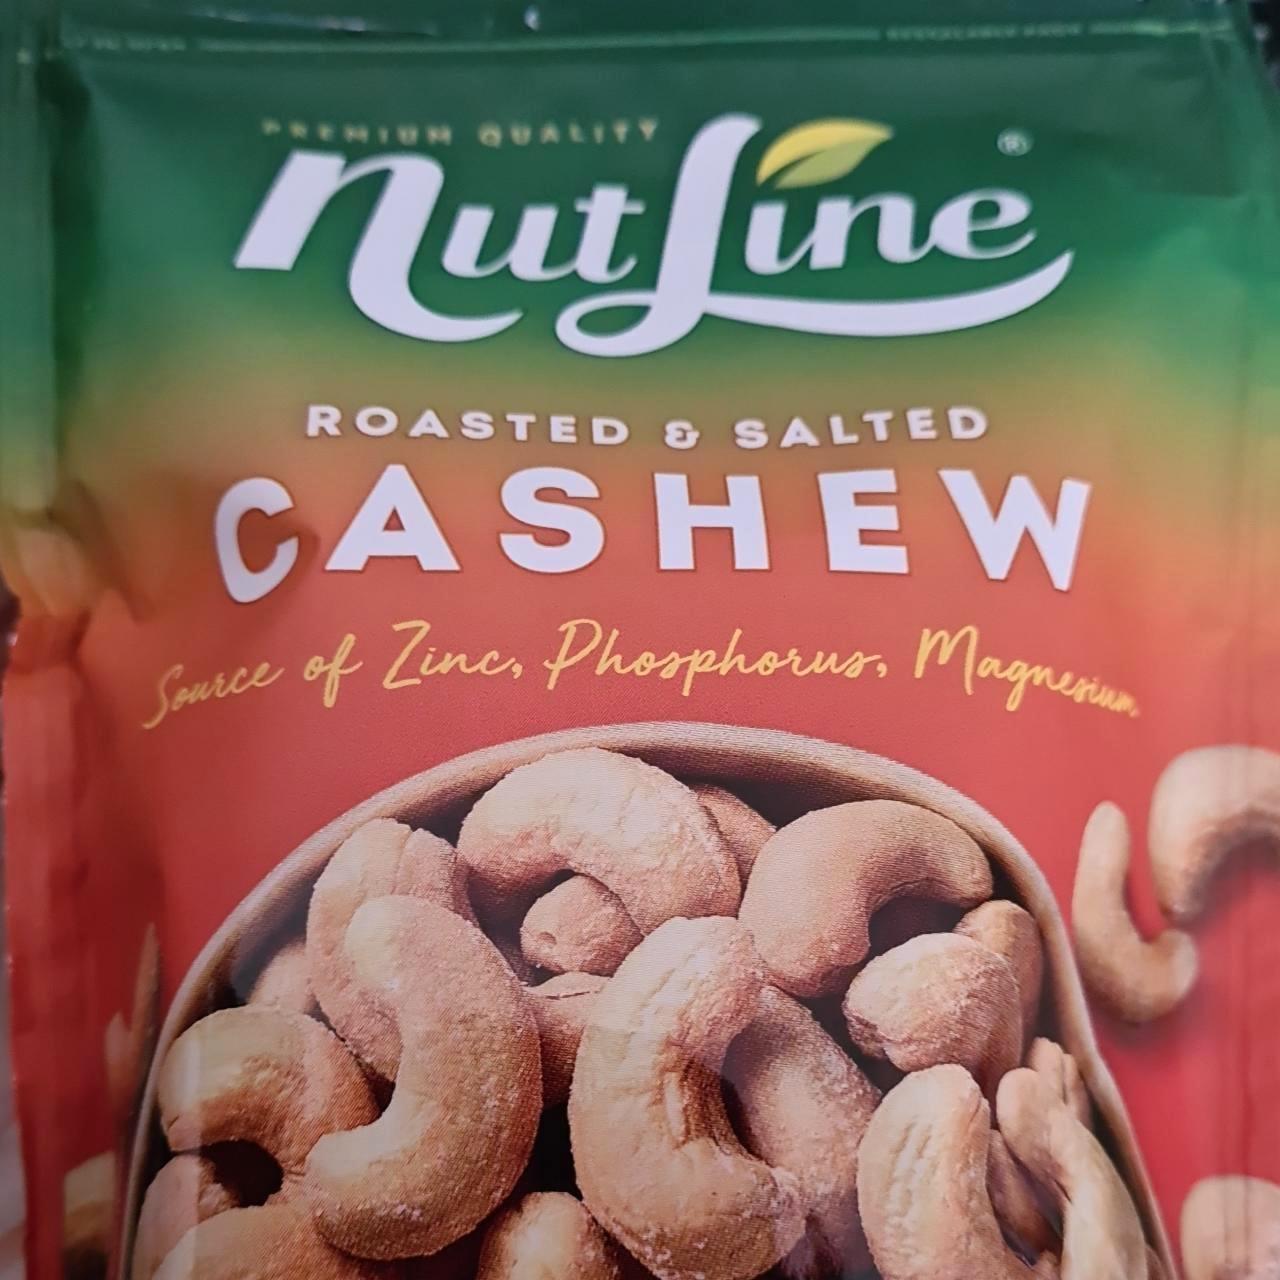 Képek - Roasted & salted cashew NutLine